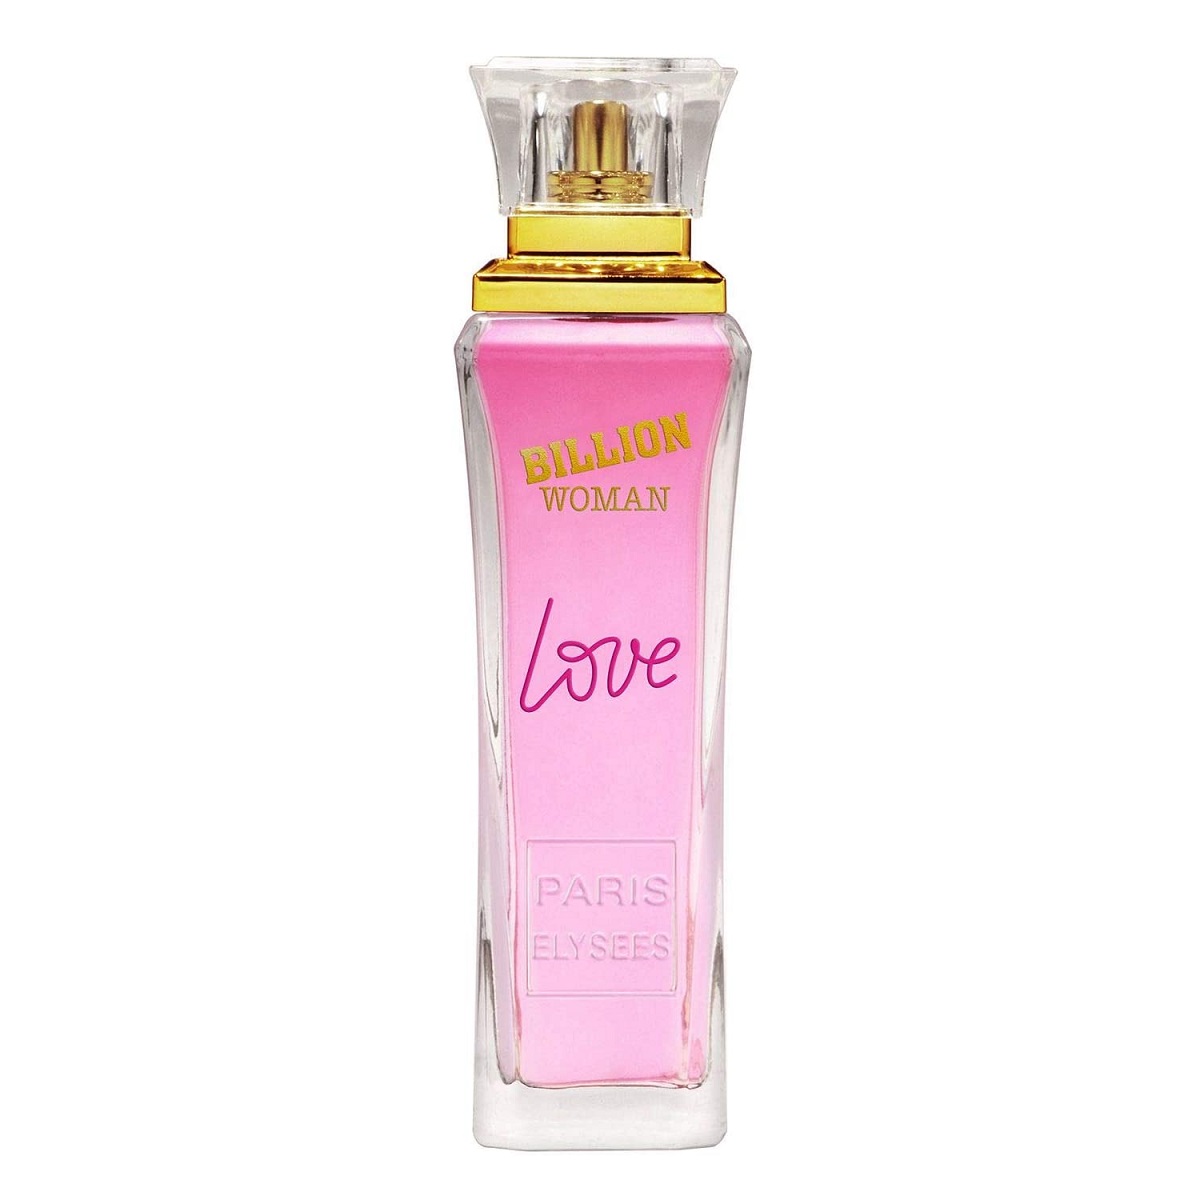 Perfume Billion Woman Love Paris Elysees 100ml - Foto 1